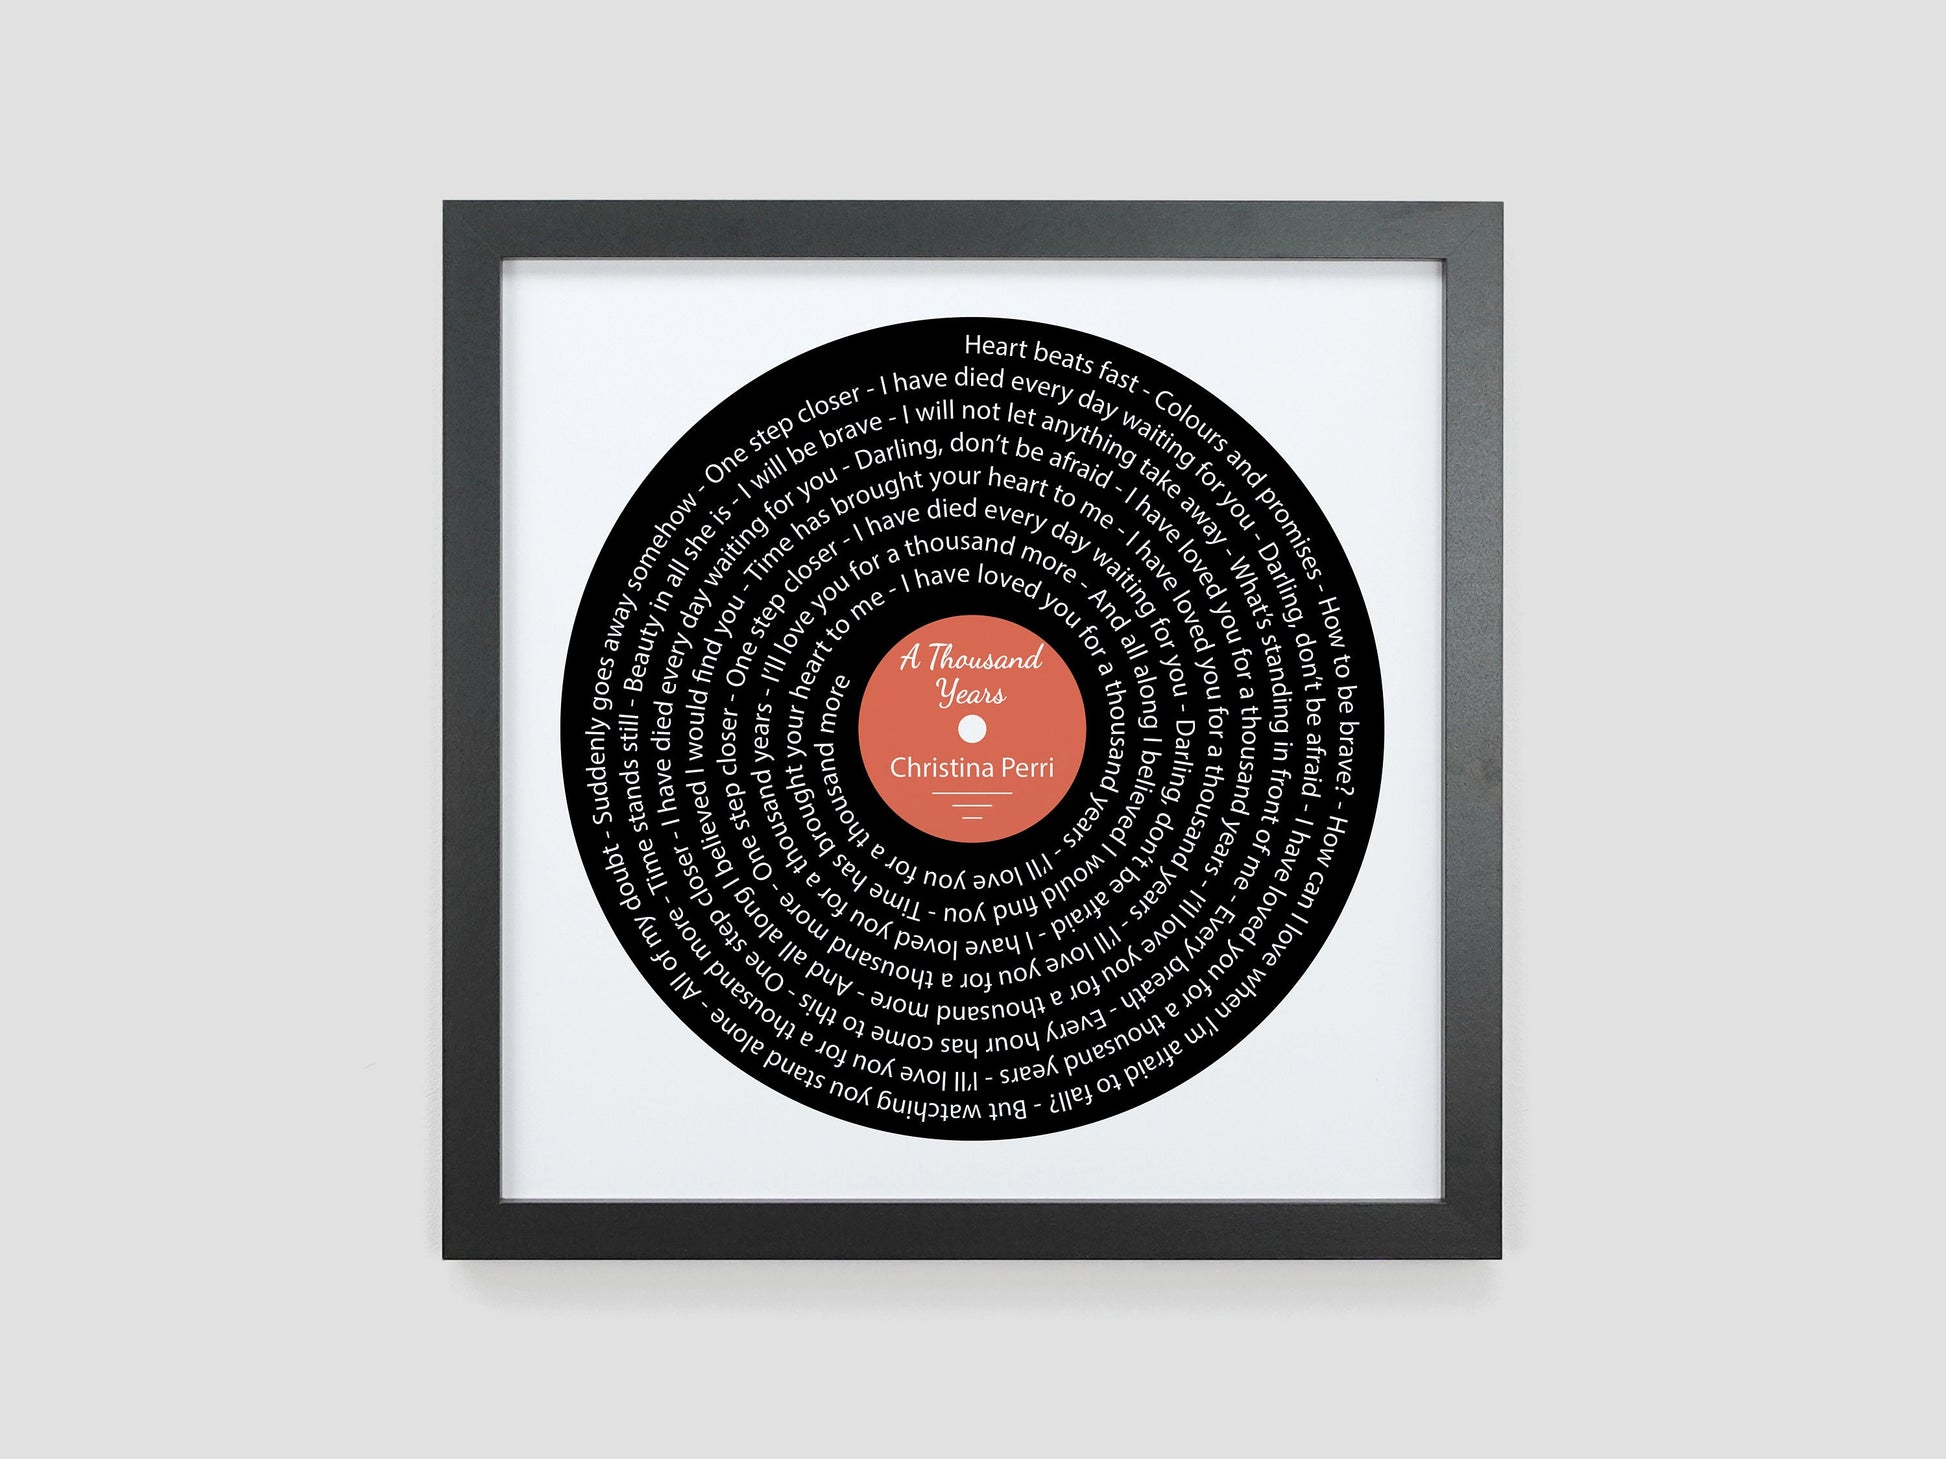 A Thousand Years - Christina Perri | Song lyric gift | Vinyl record print | First Dance present | Wedding gift | Anniversary present VA009